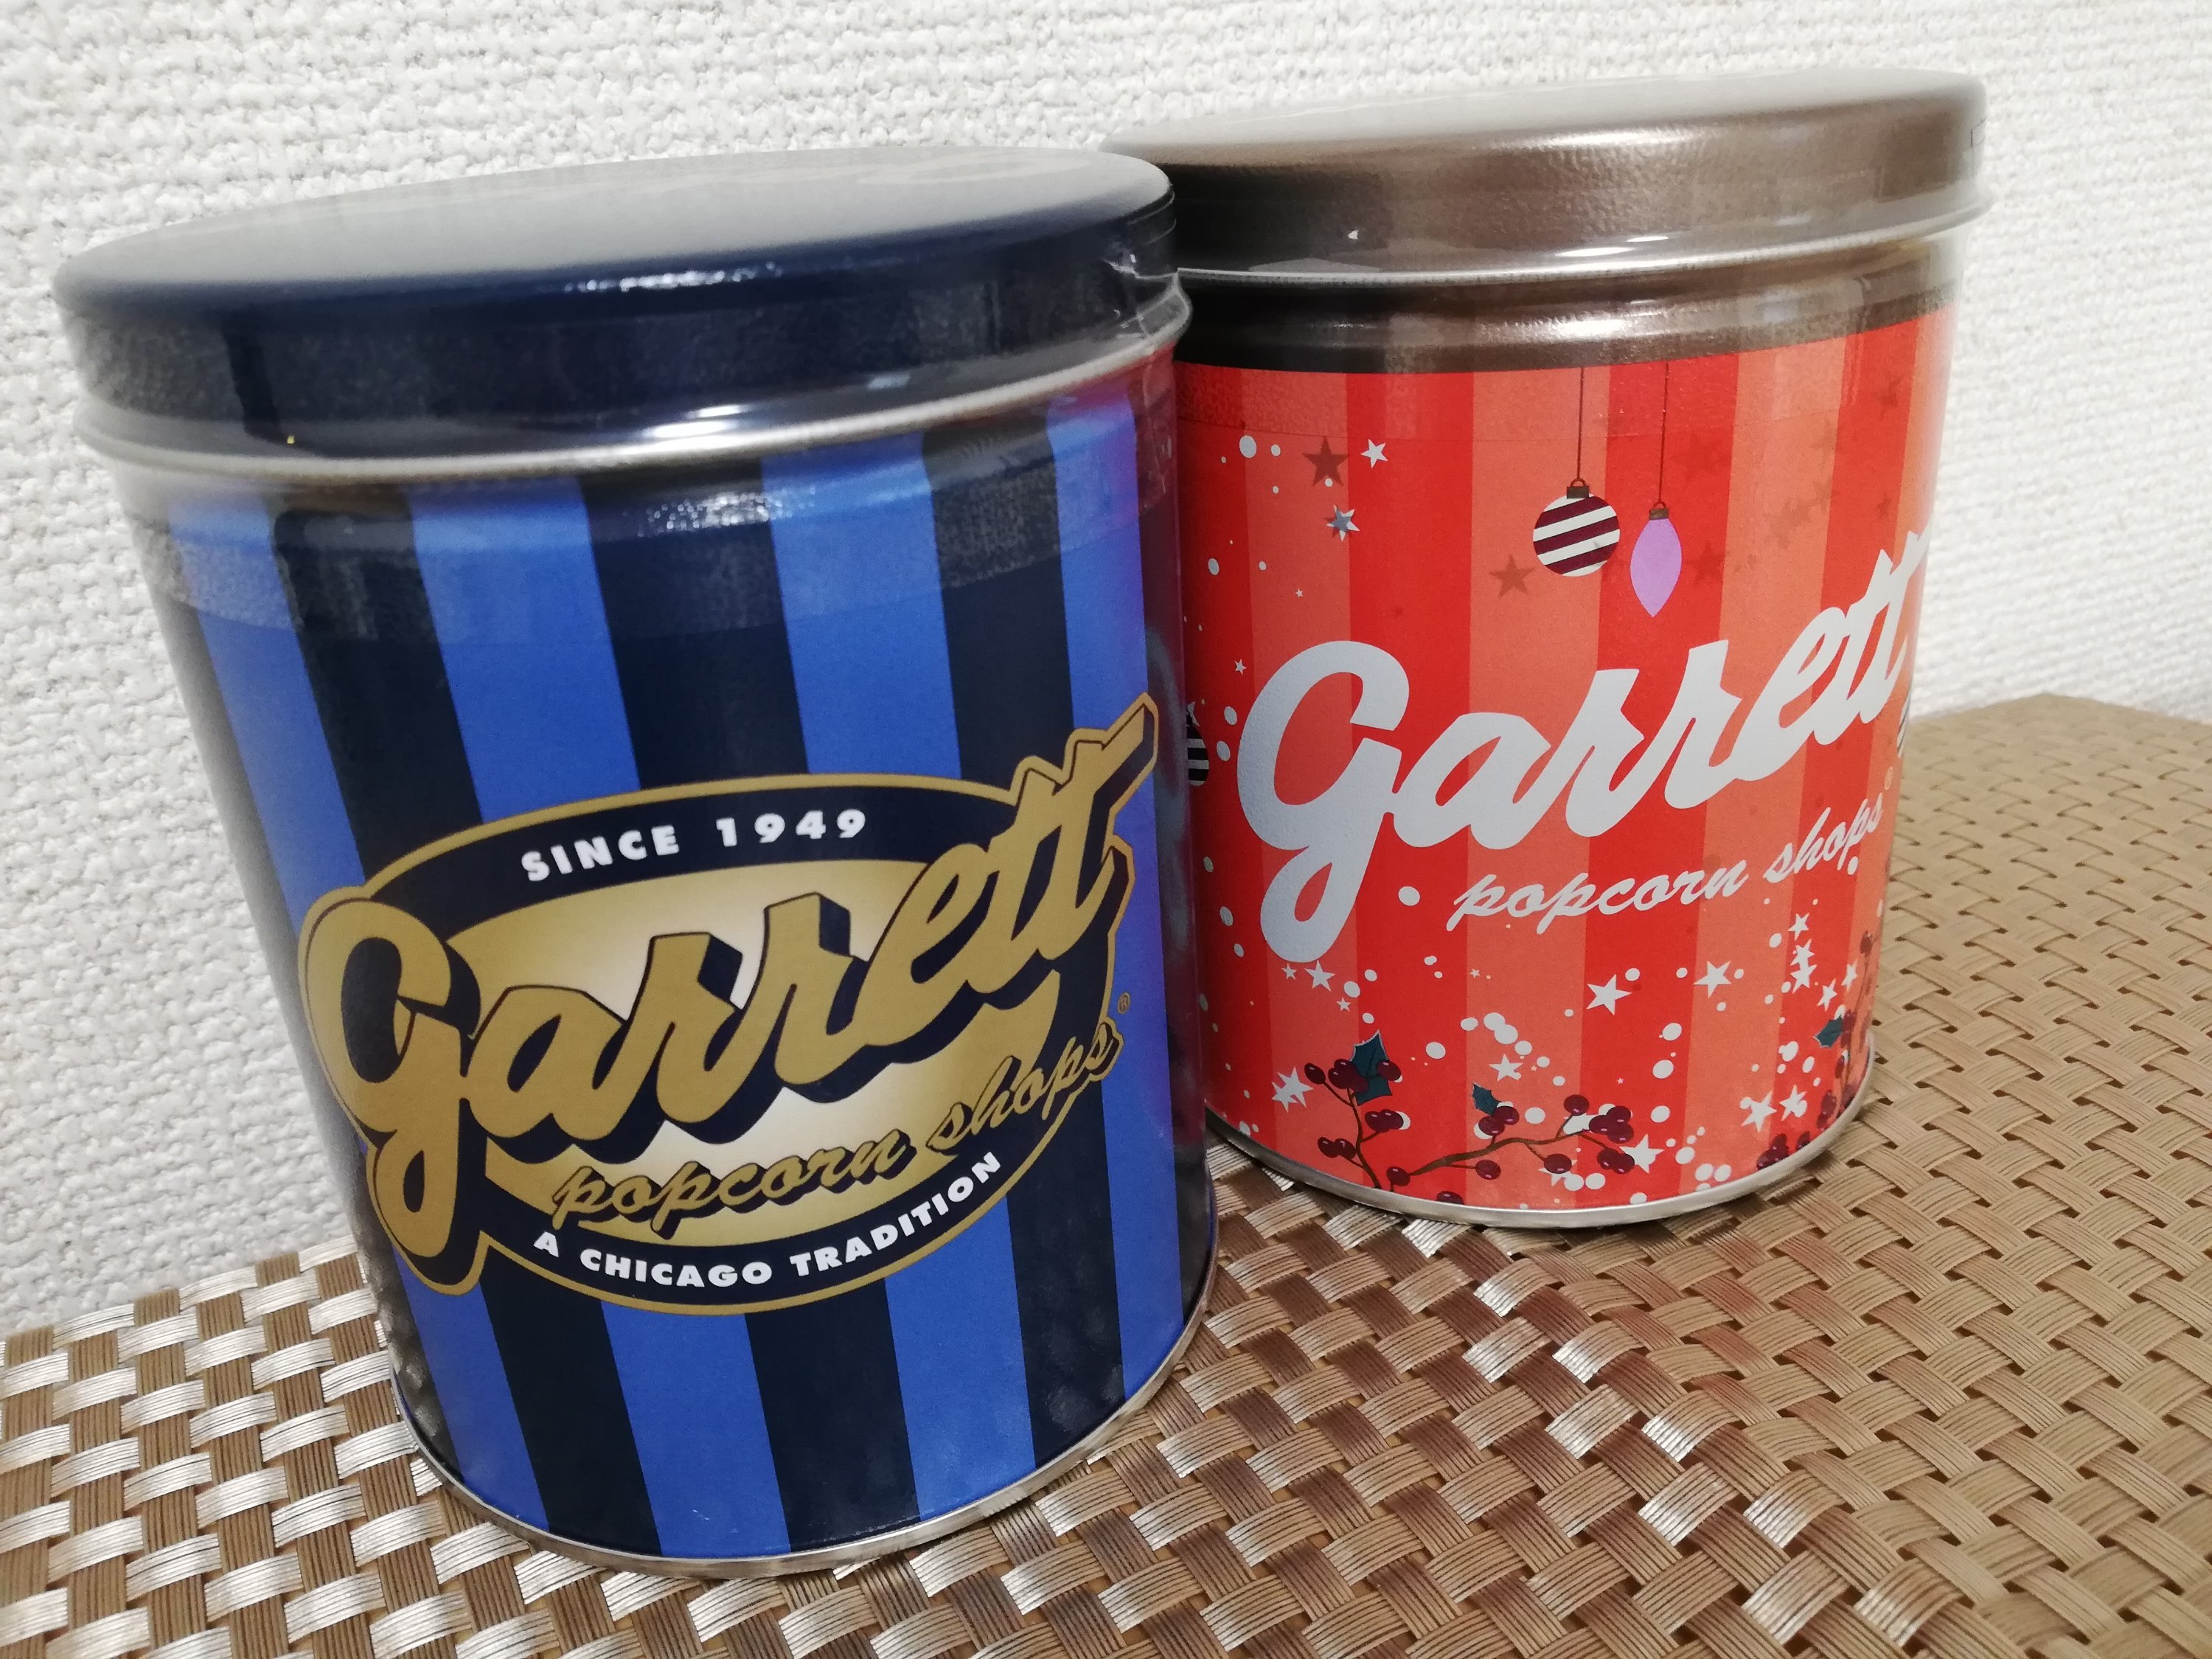 Garrettの通年ある缶とクリスマス限定ホリデー缶